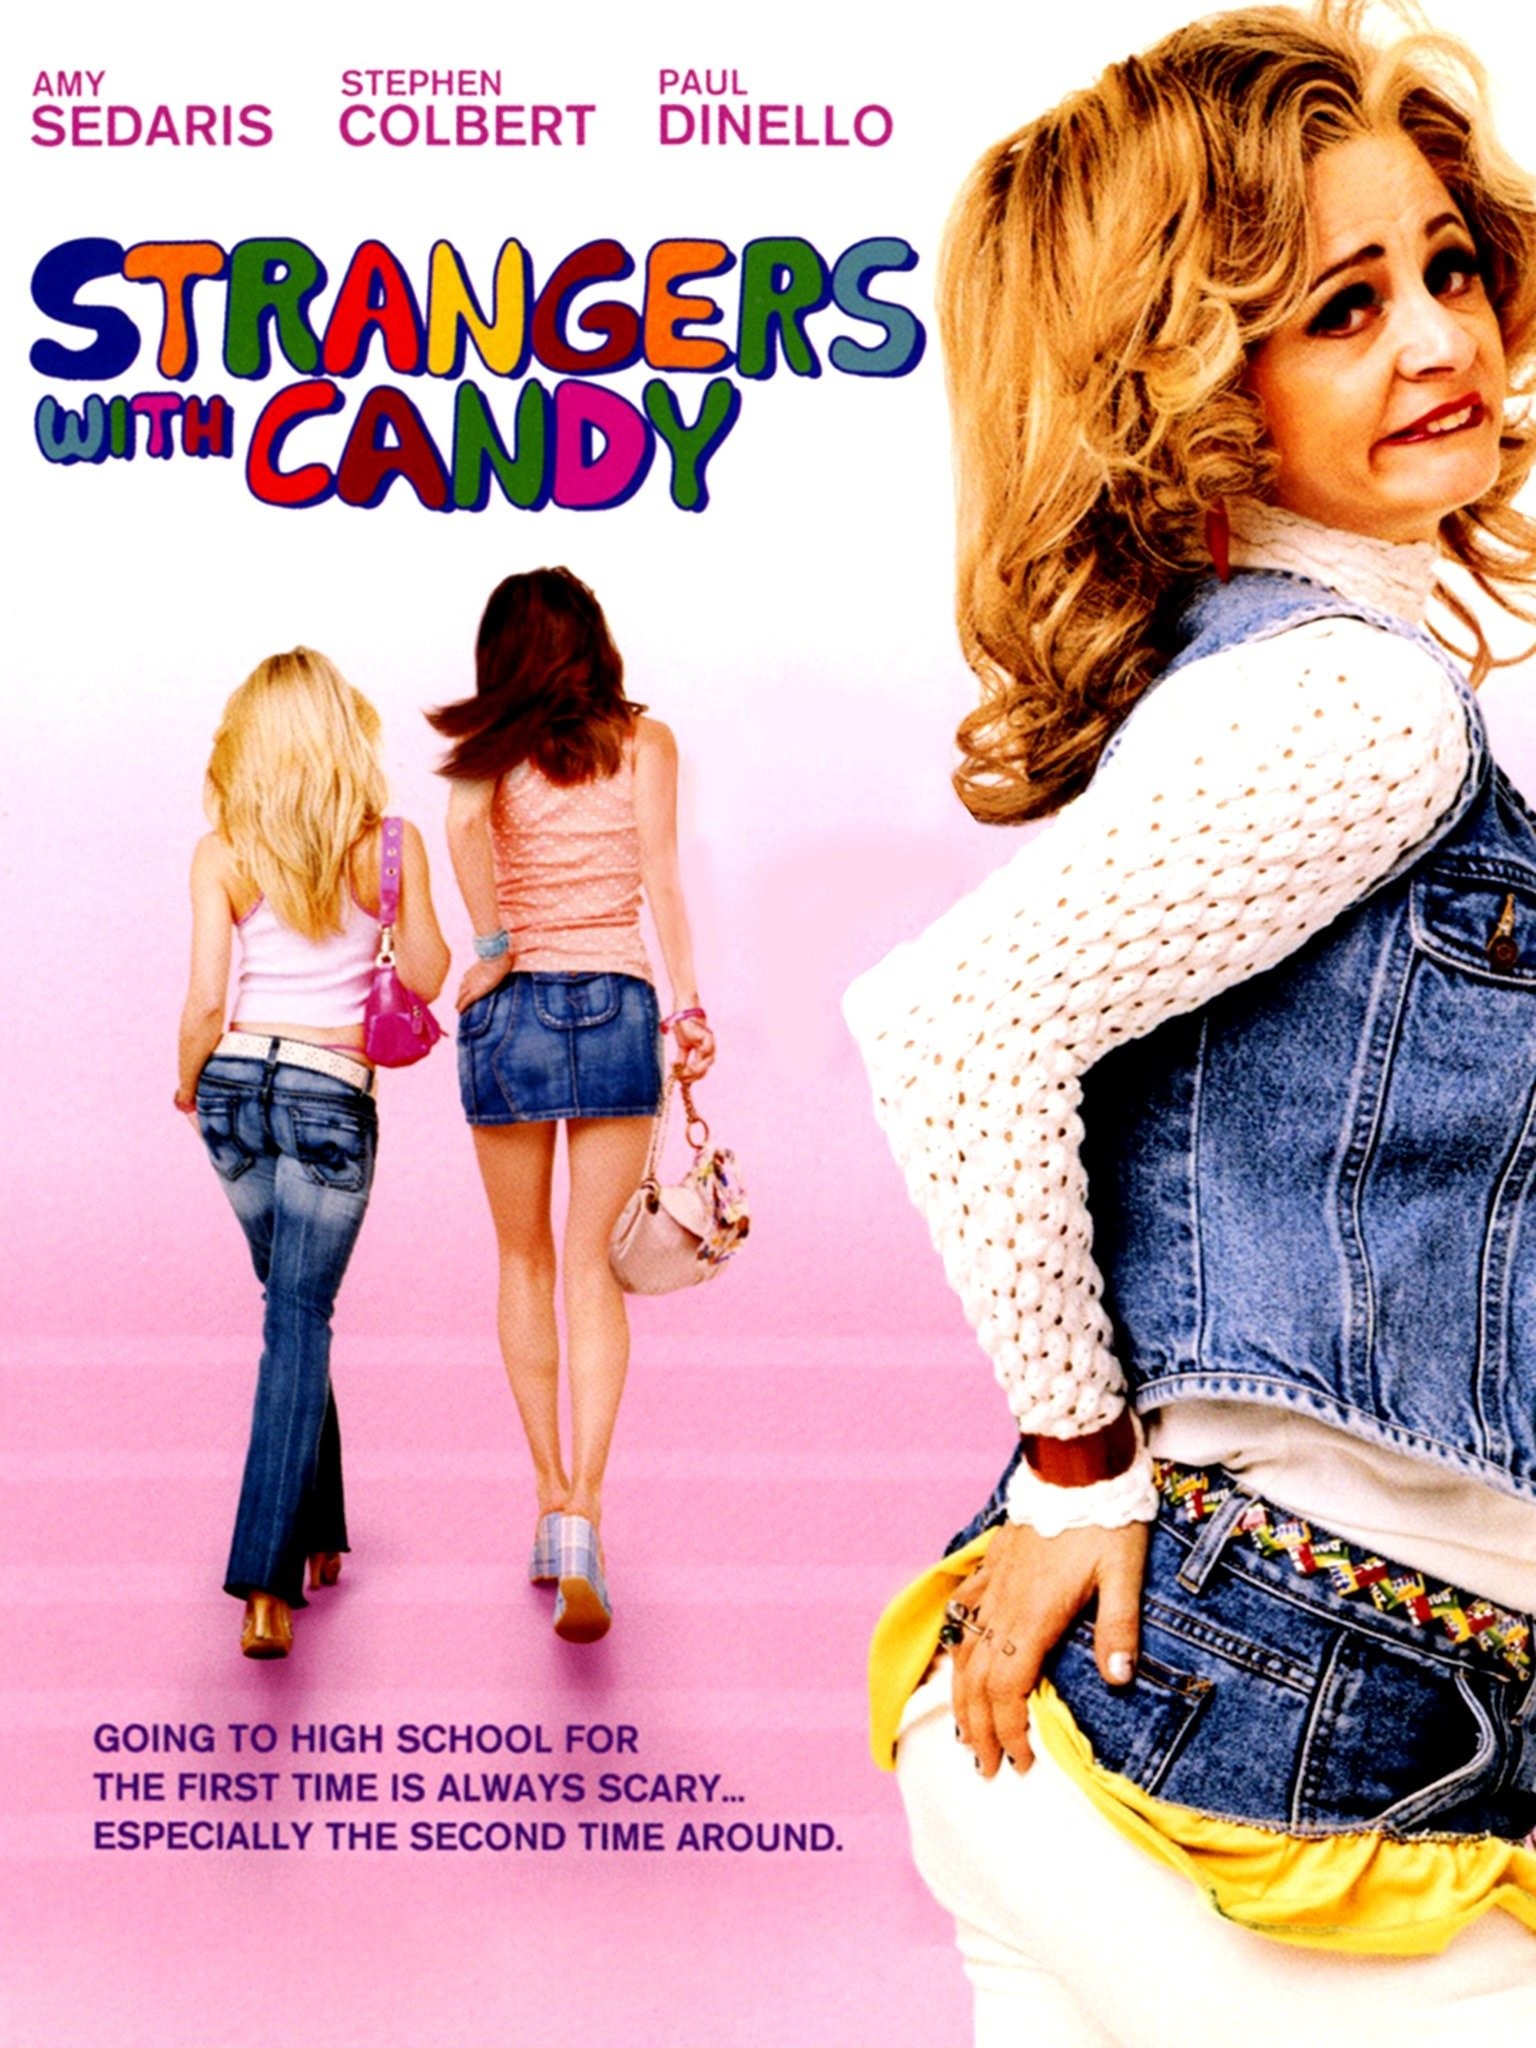 Strangers with Candy  Amy sedaris, Good movies, Stranger